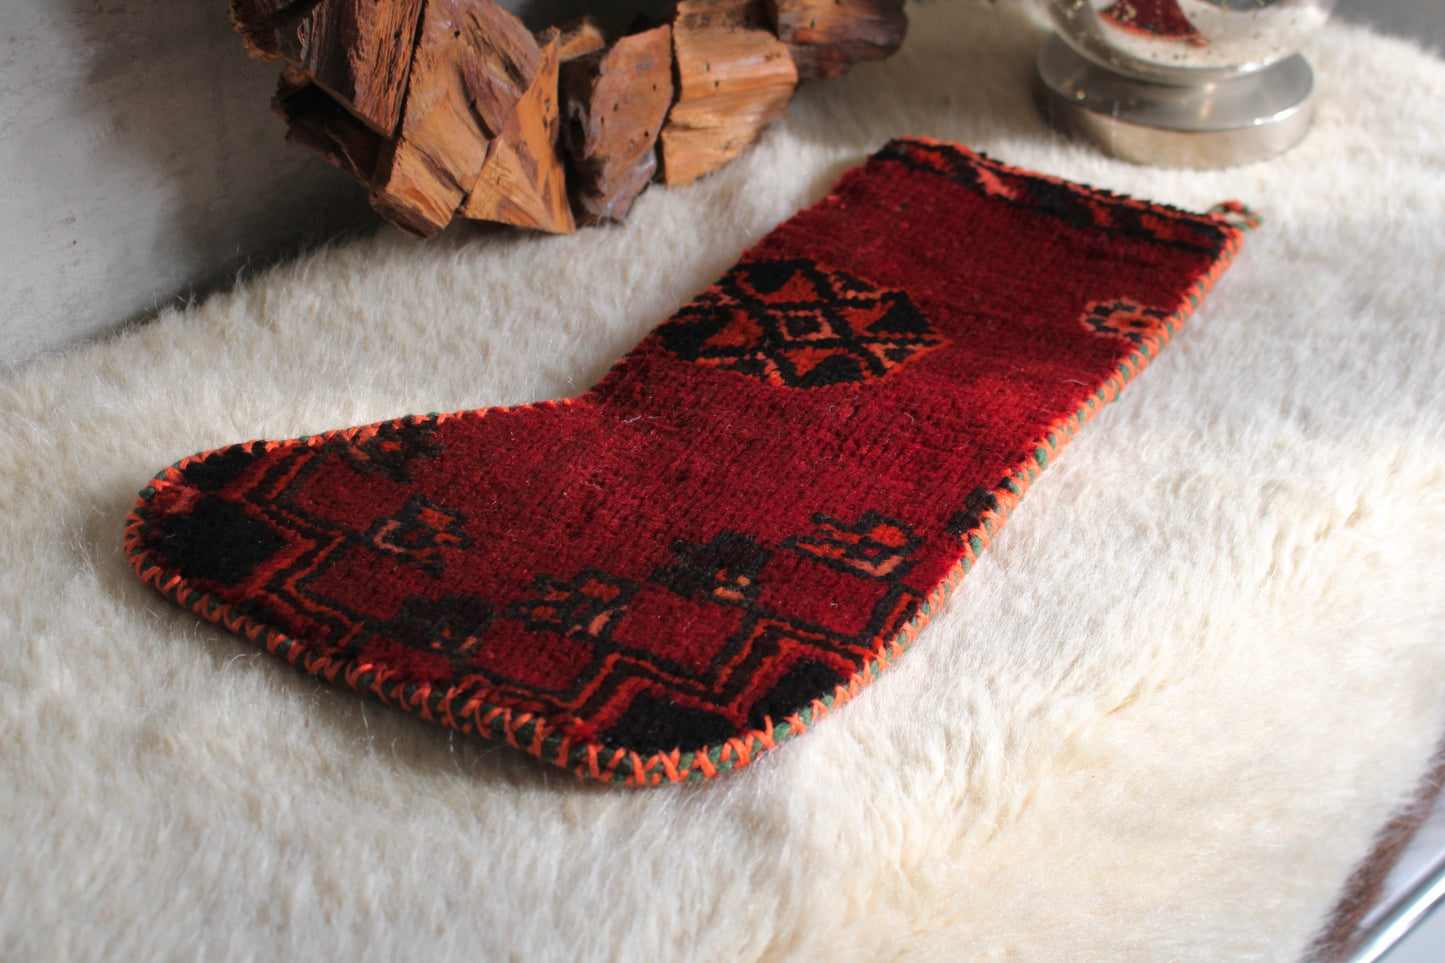 Iran antiques | Christmas Santa Socks 39×25cm No.71